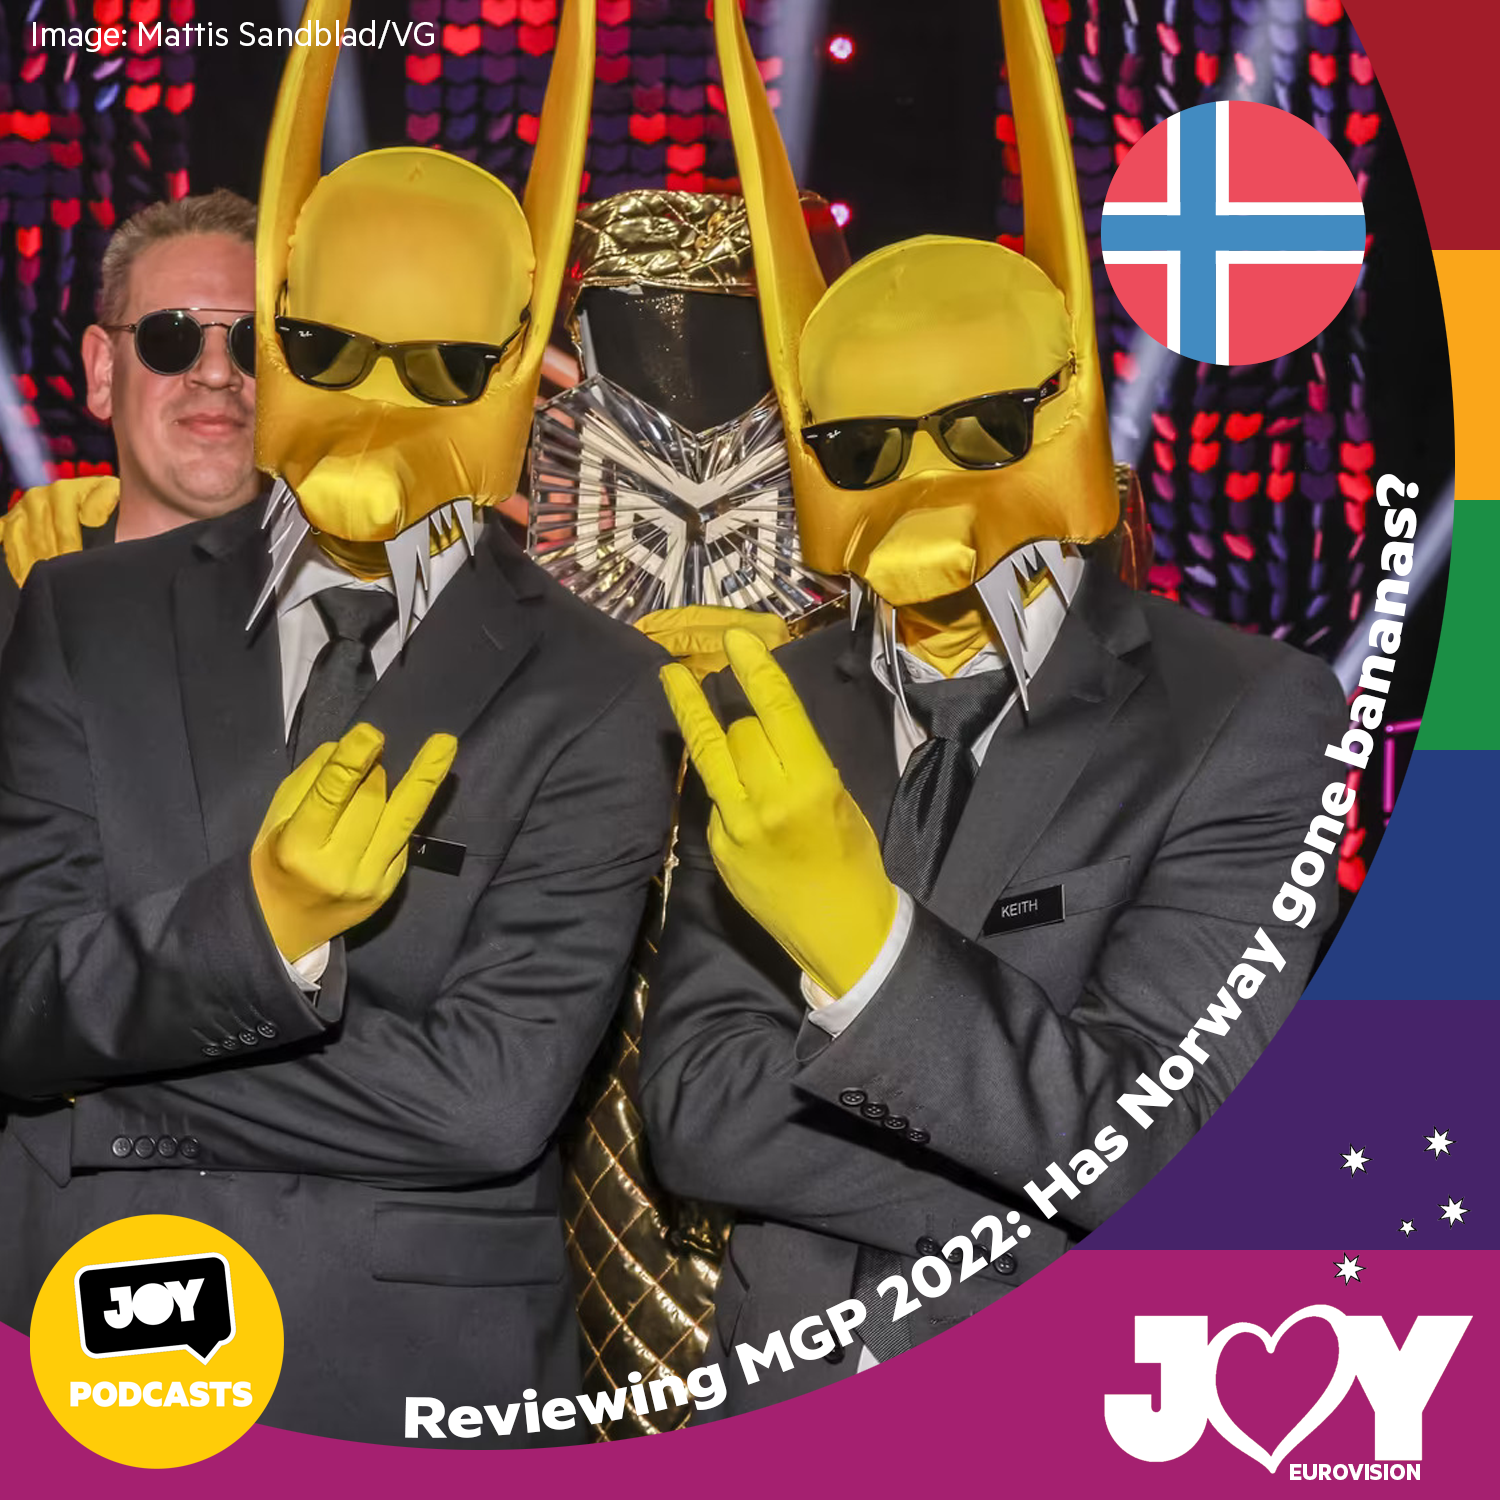 🇳🇴 Reviewing MGP 2022: Has Norway gone bananas?